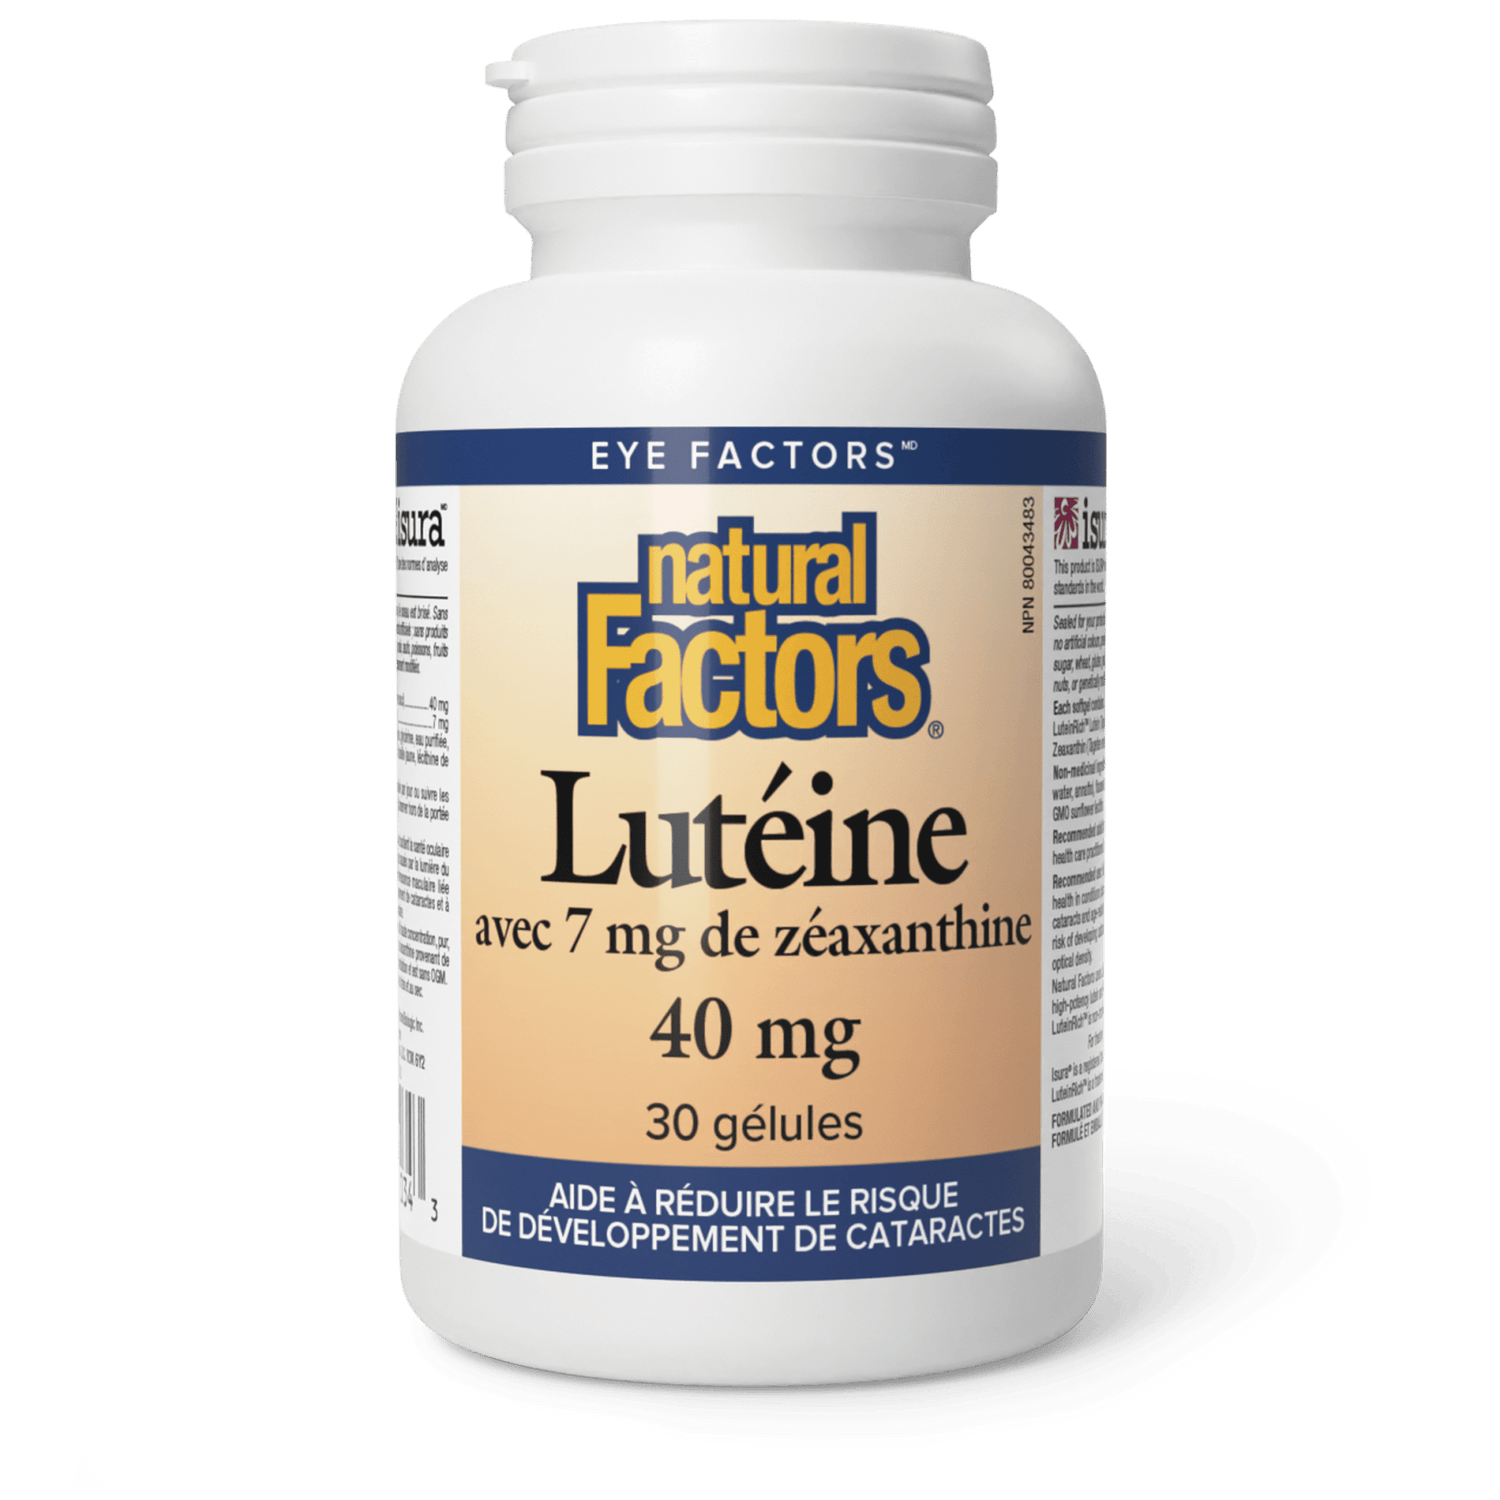 Lutéine 40 mg avec 7 mg de zéaxanthine, Natural Factors|v|image|1034